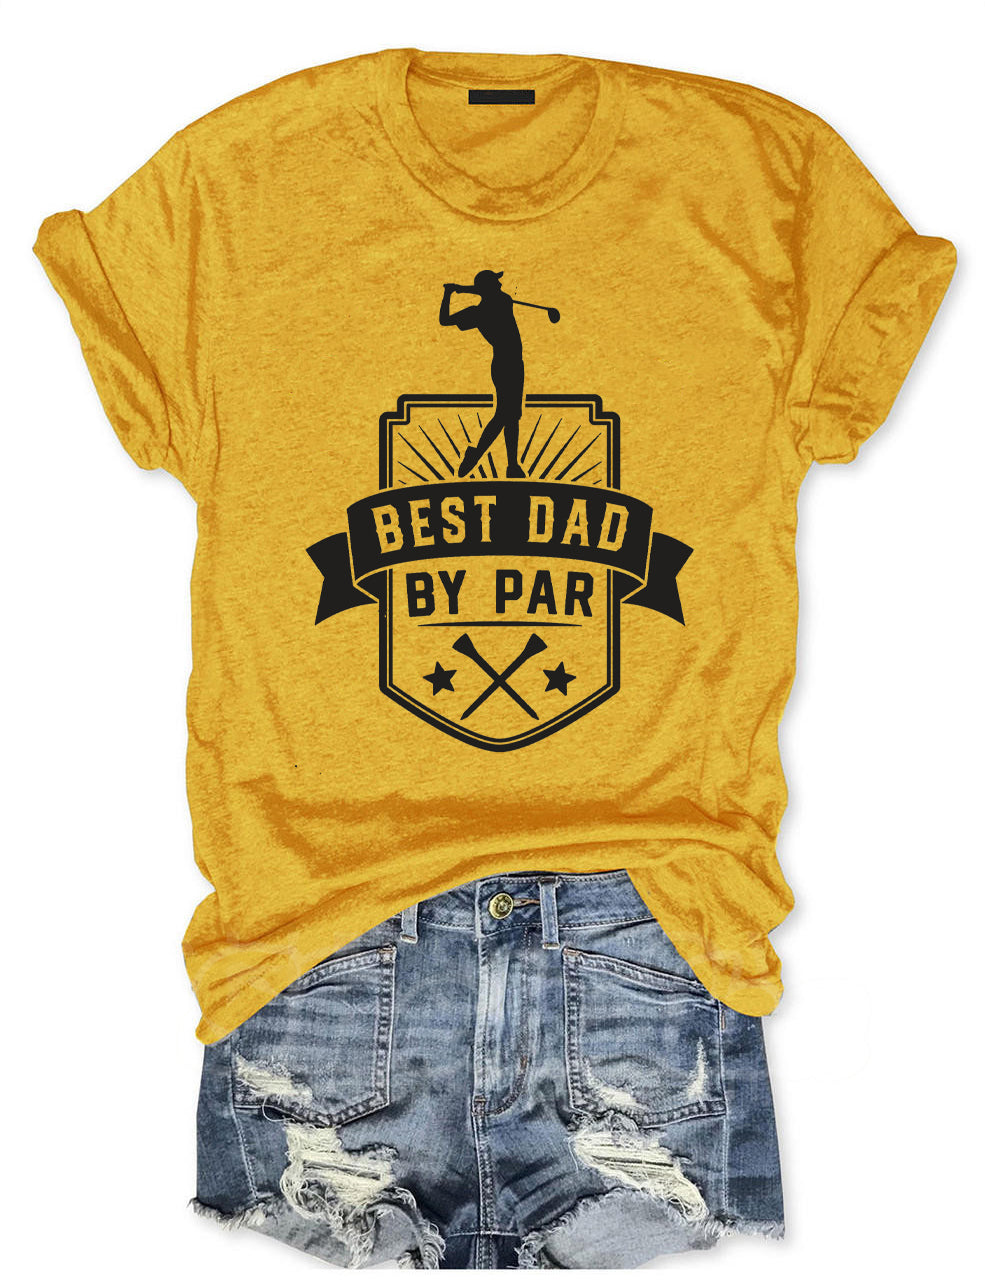 Best Dad By Par Golf T-shirt